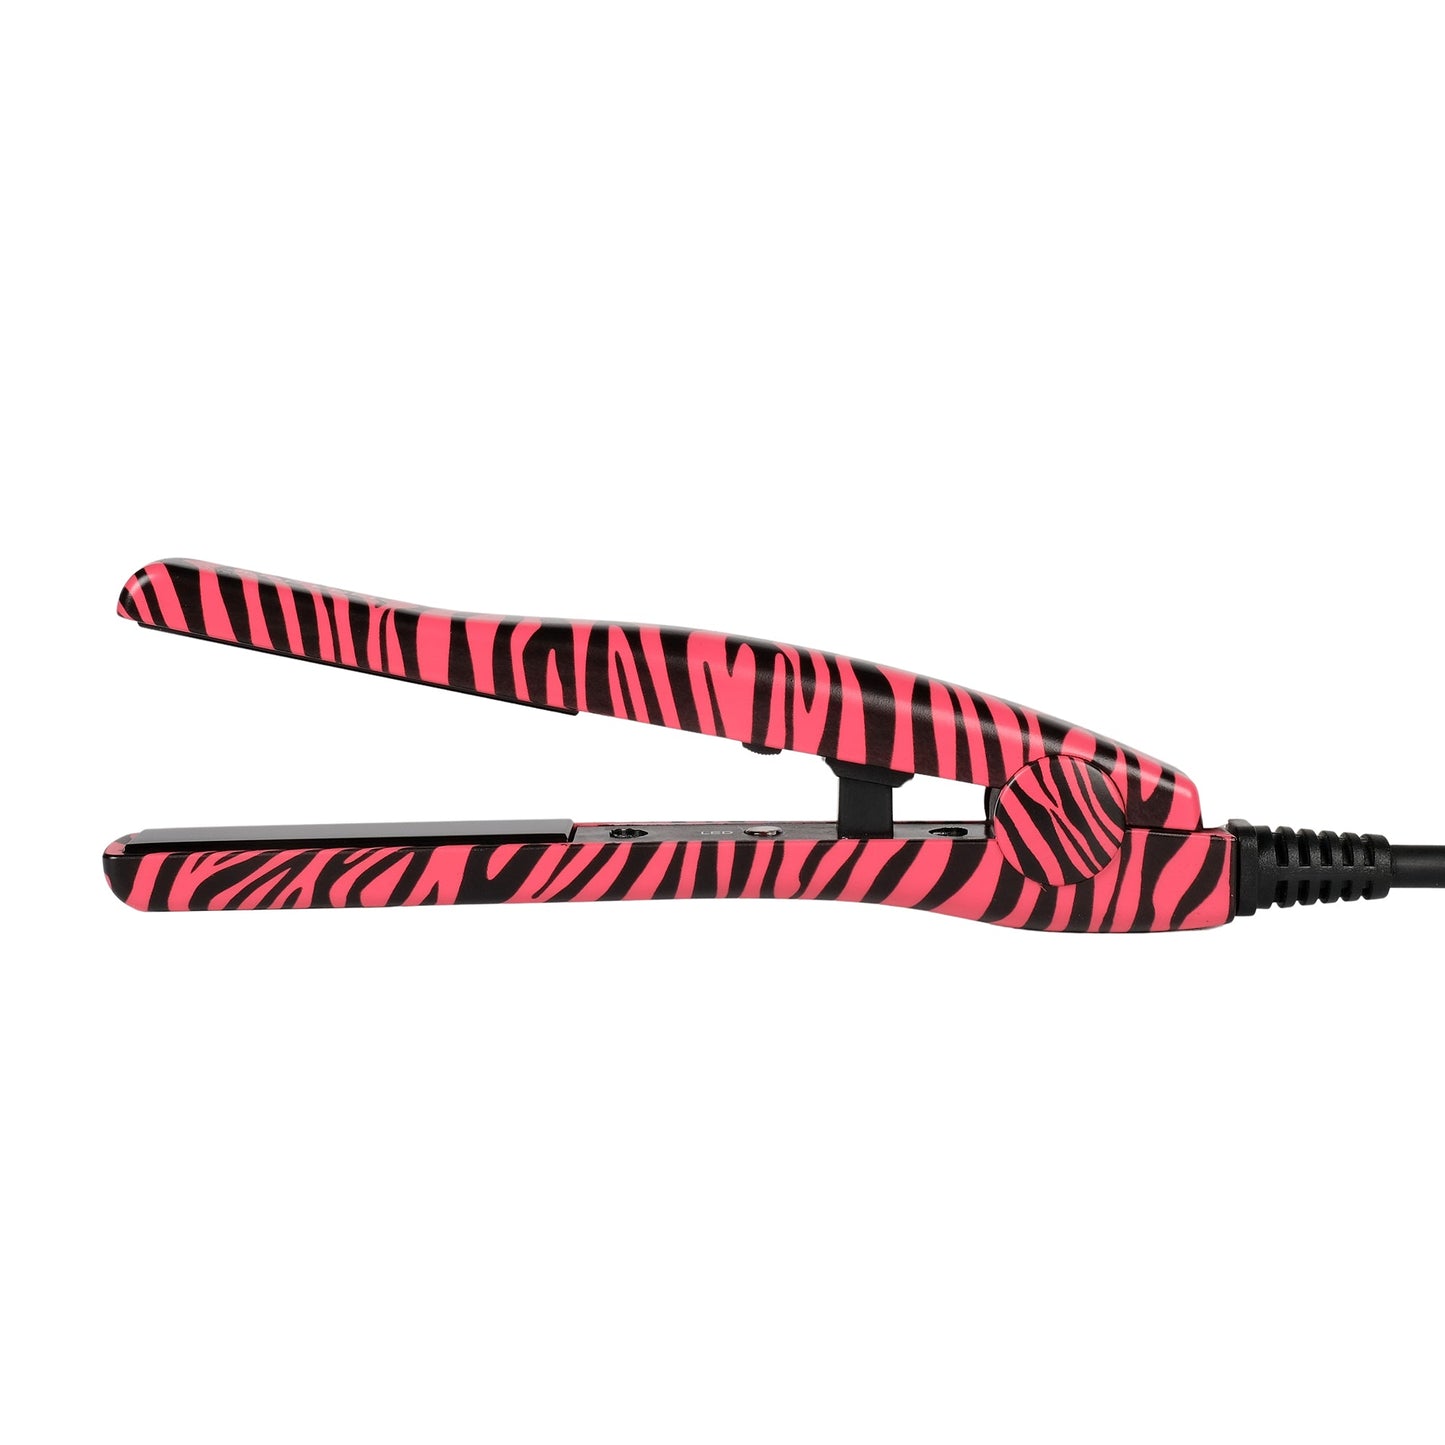 Jose Eber Pure Ceramic Professional Petite Hair Straightener - Fast Heat Up Mini Flat Iron- Pink Zebra - Couture Hair Pro